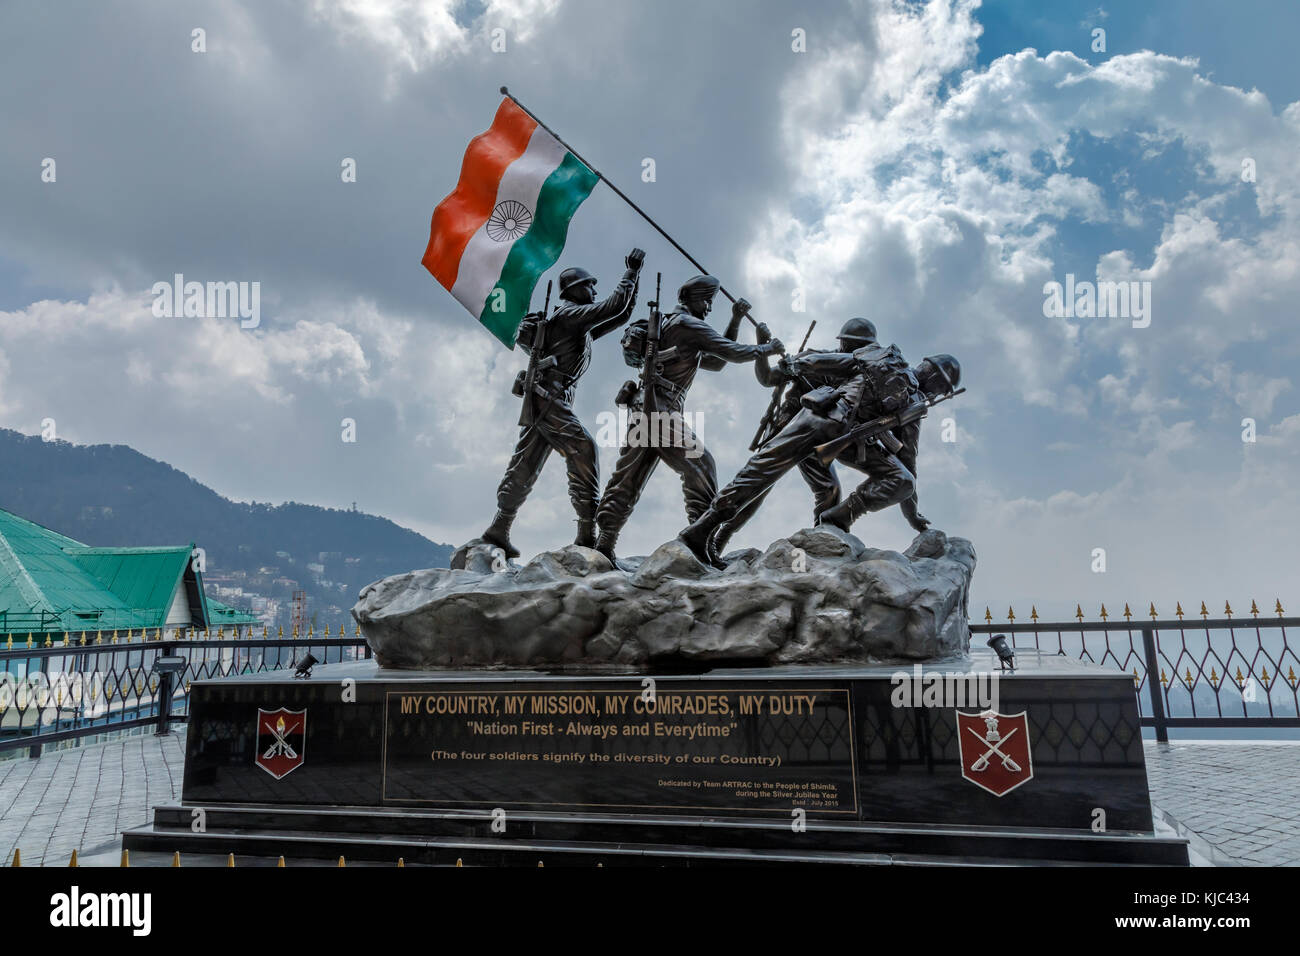 Heroic Indian Army memorial at night, soldiers raising national flag, Mall Road, Simla (Shimla), capial city of Himachal Pradesh, northern India Stock Photo